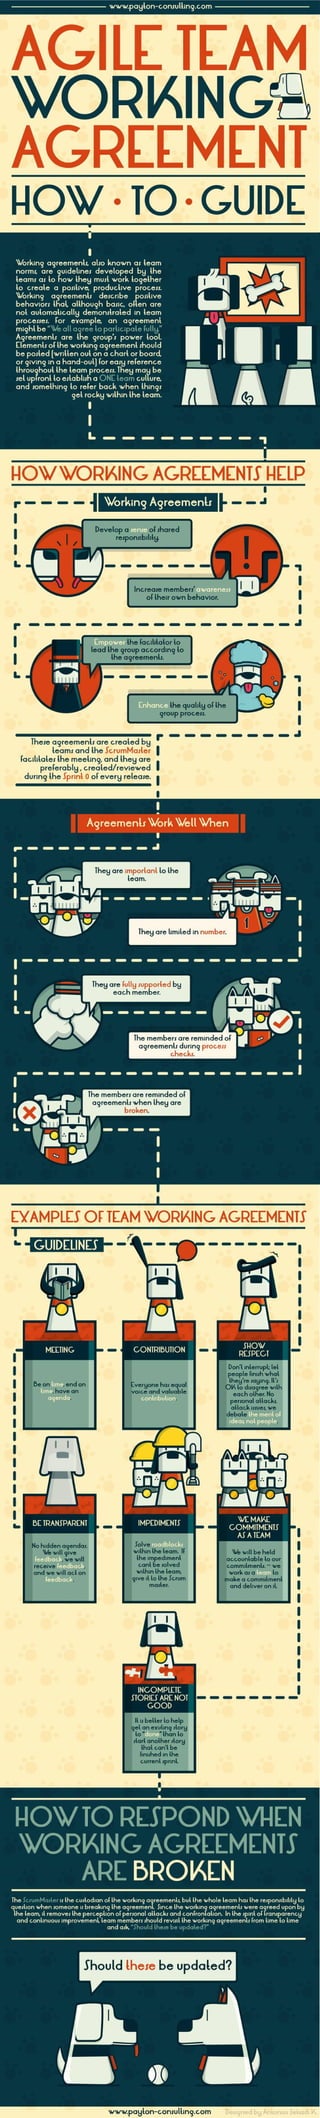 Agile Team Working Agreements